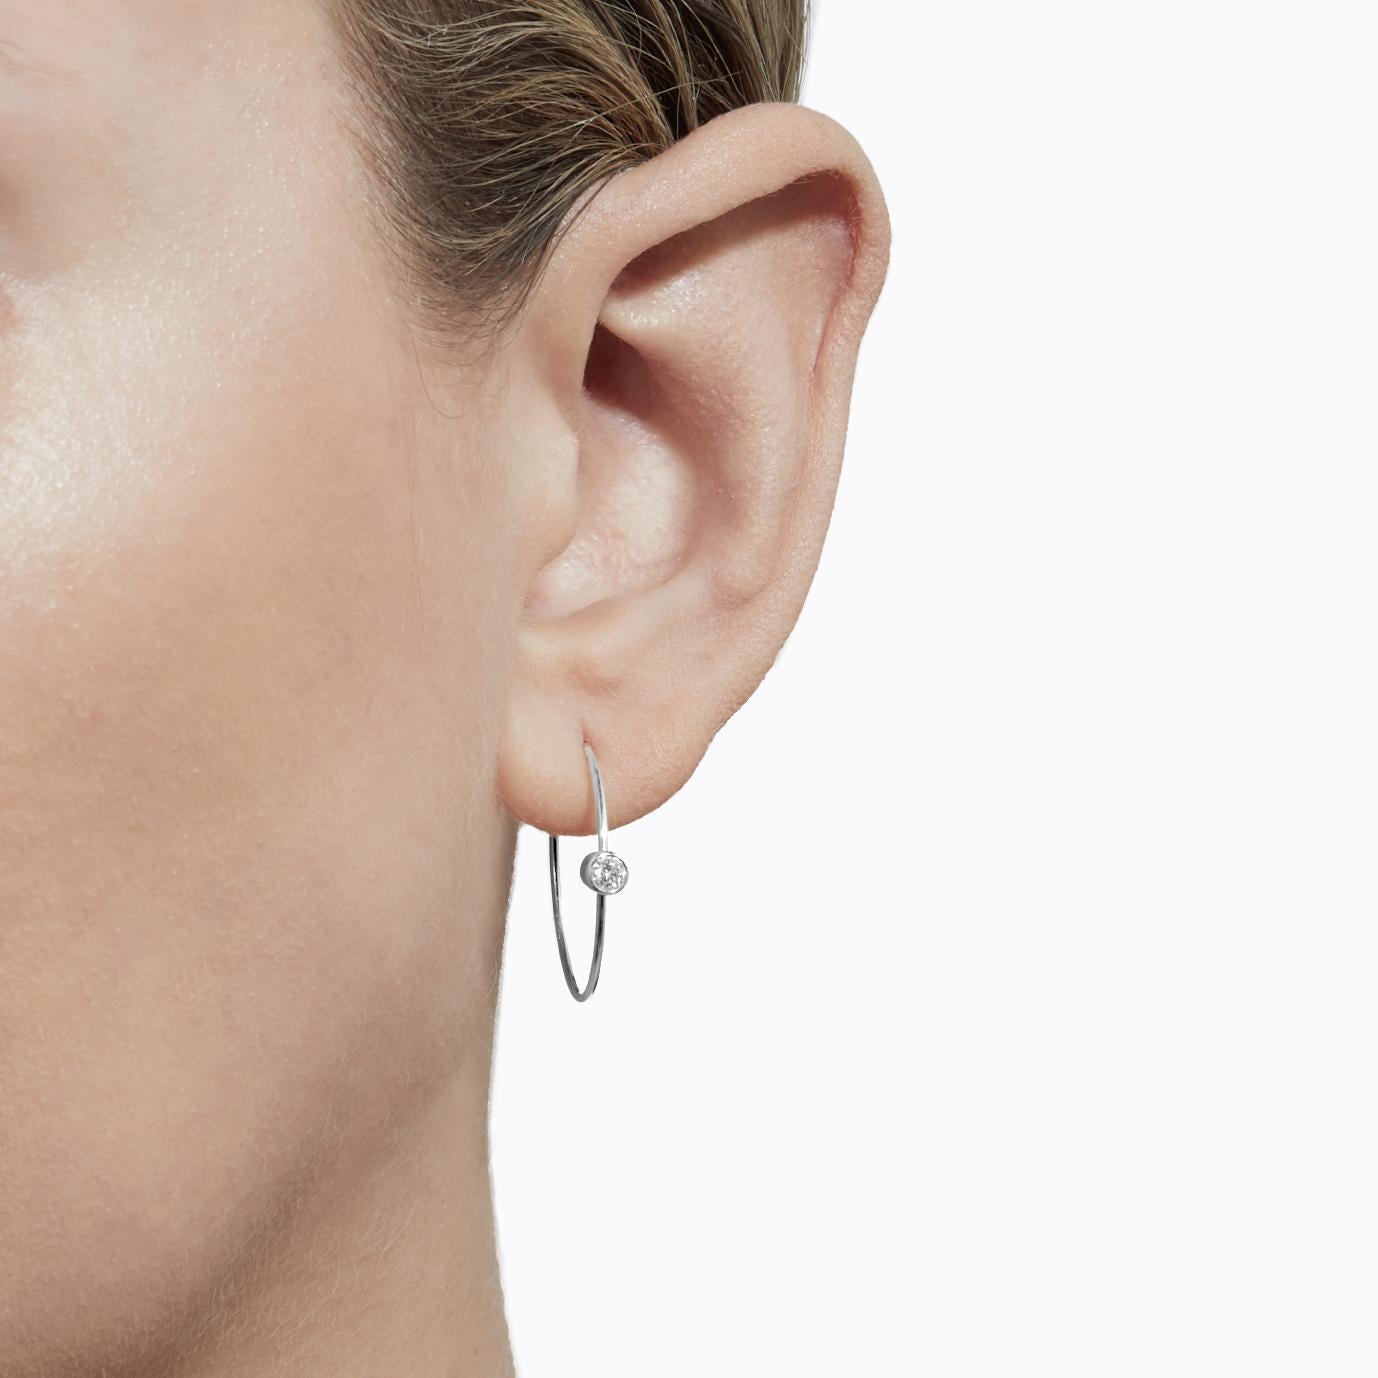 0.1 carat diamond earrings